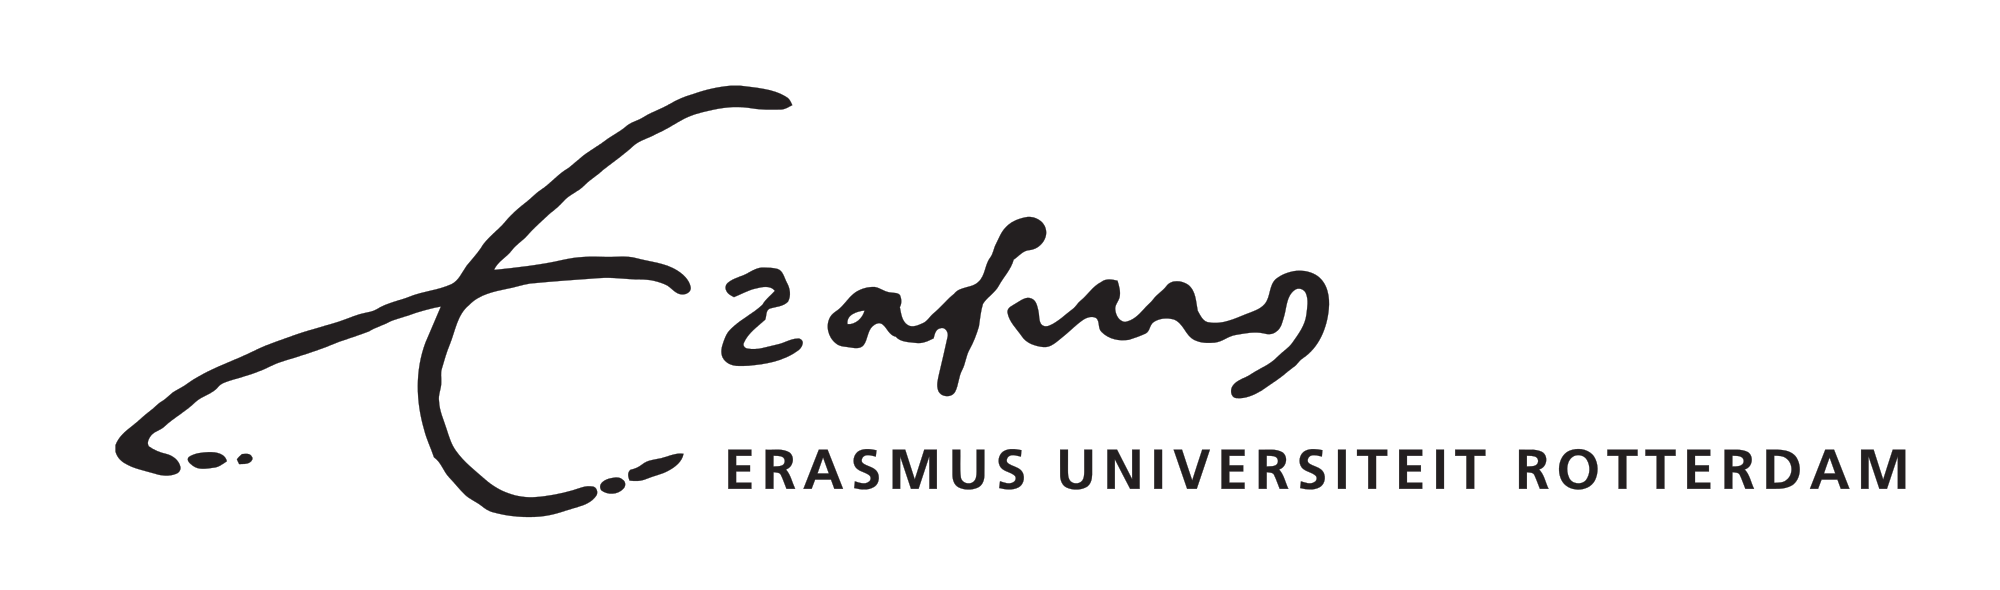 Rotterdam Logo - Logo Erasmus Universiteit Rotterdam.svg